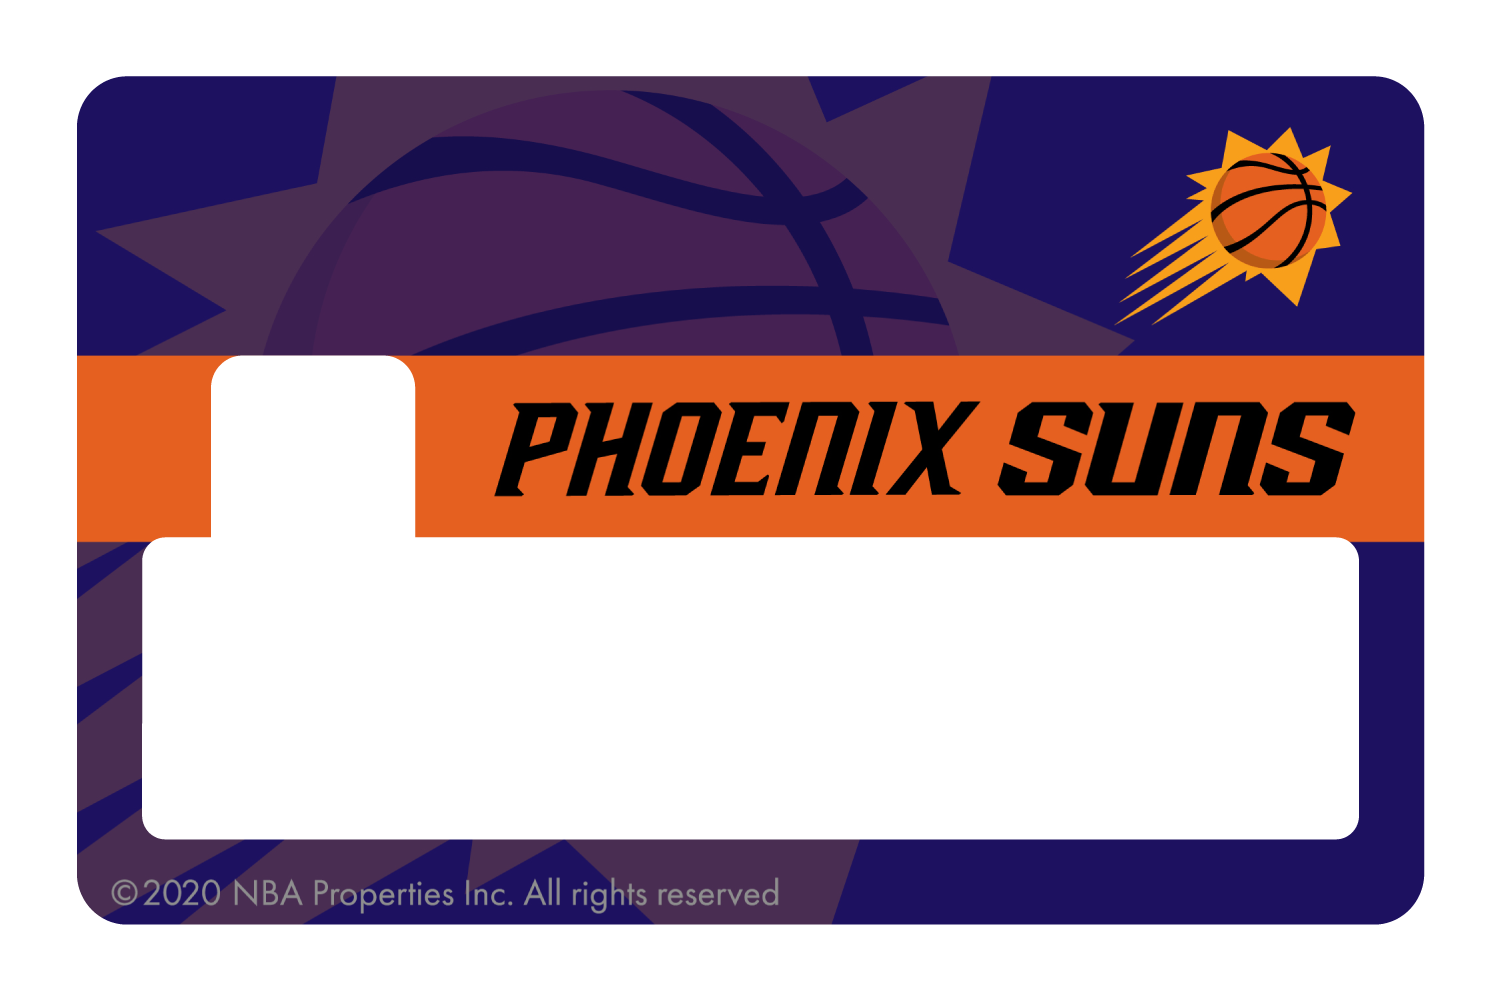 Phoenix Suns: Midcourt